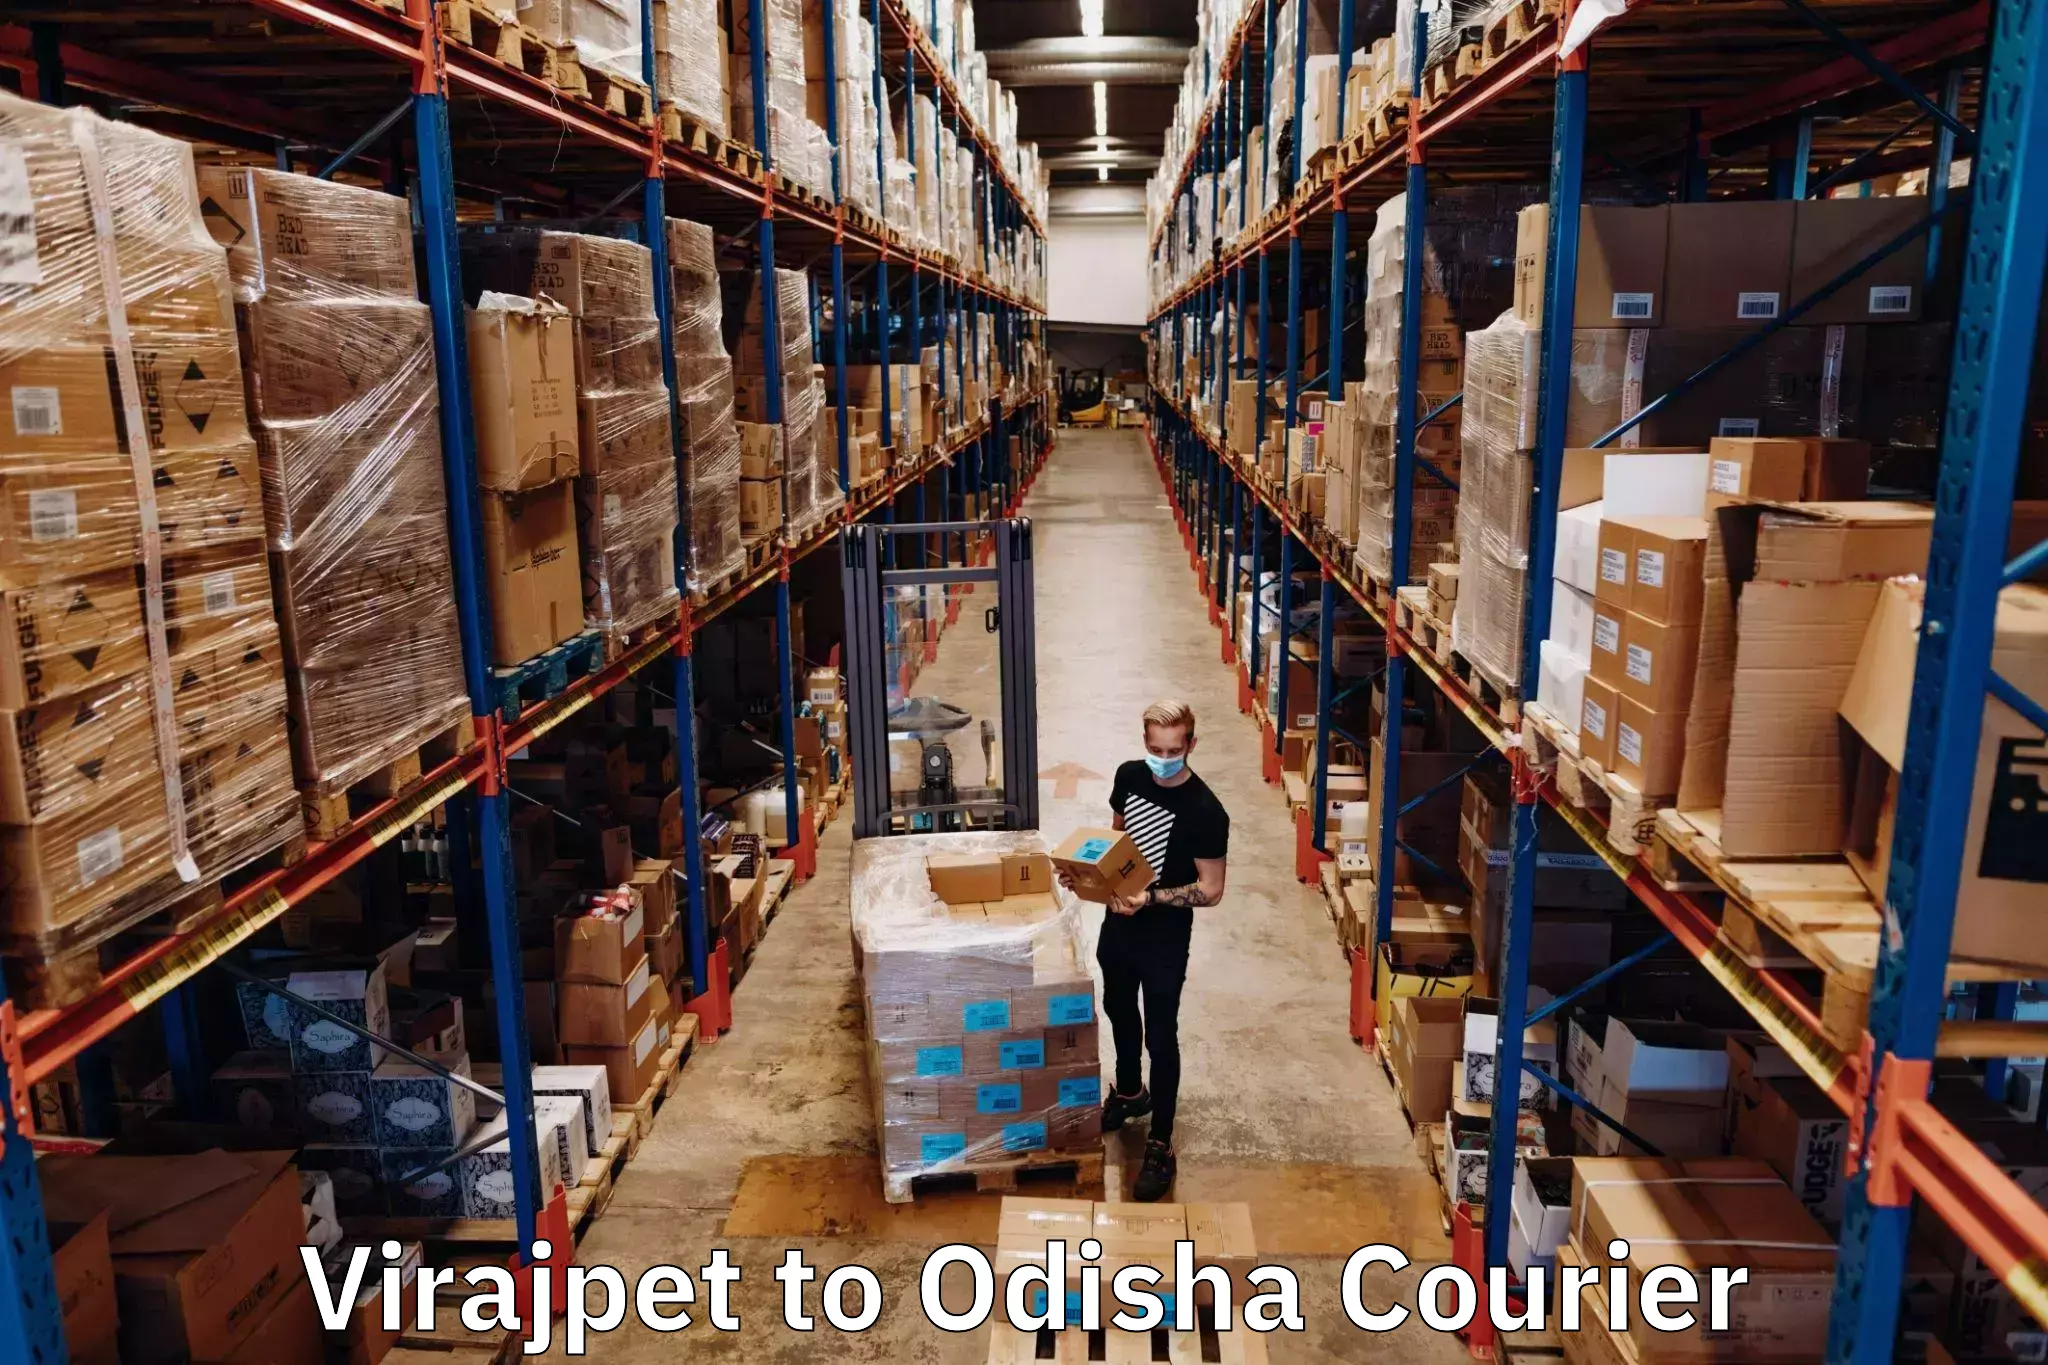 Courier service innovation Virajpet to Odisha